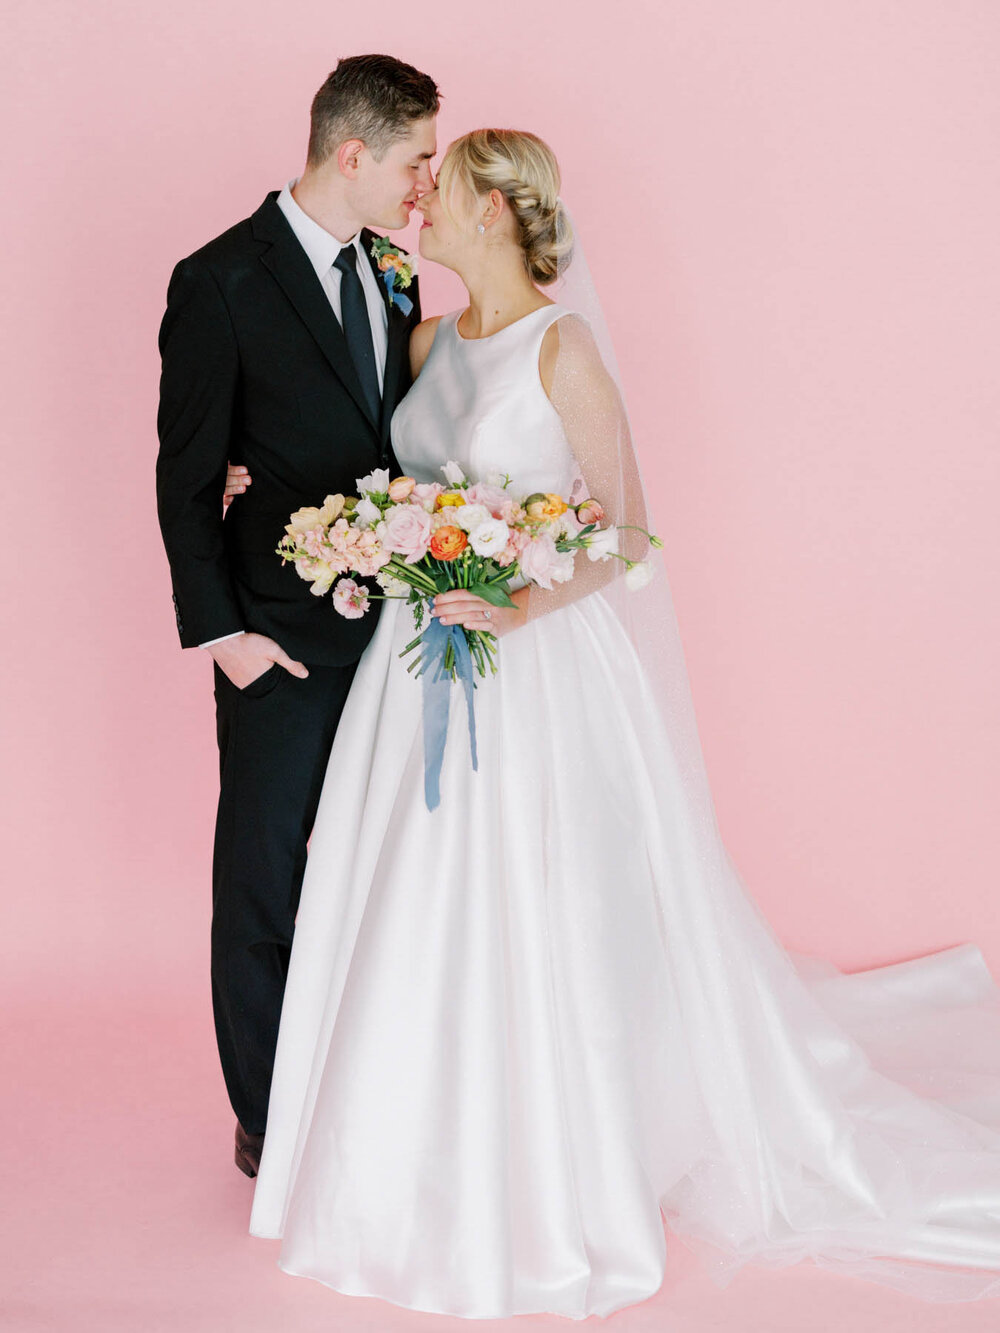 Lynchburg-wedding-weddingphotographer-film-atelier-mircowedding-love-lynchburgphotographer-23.jpg